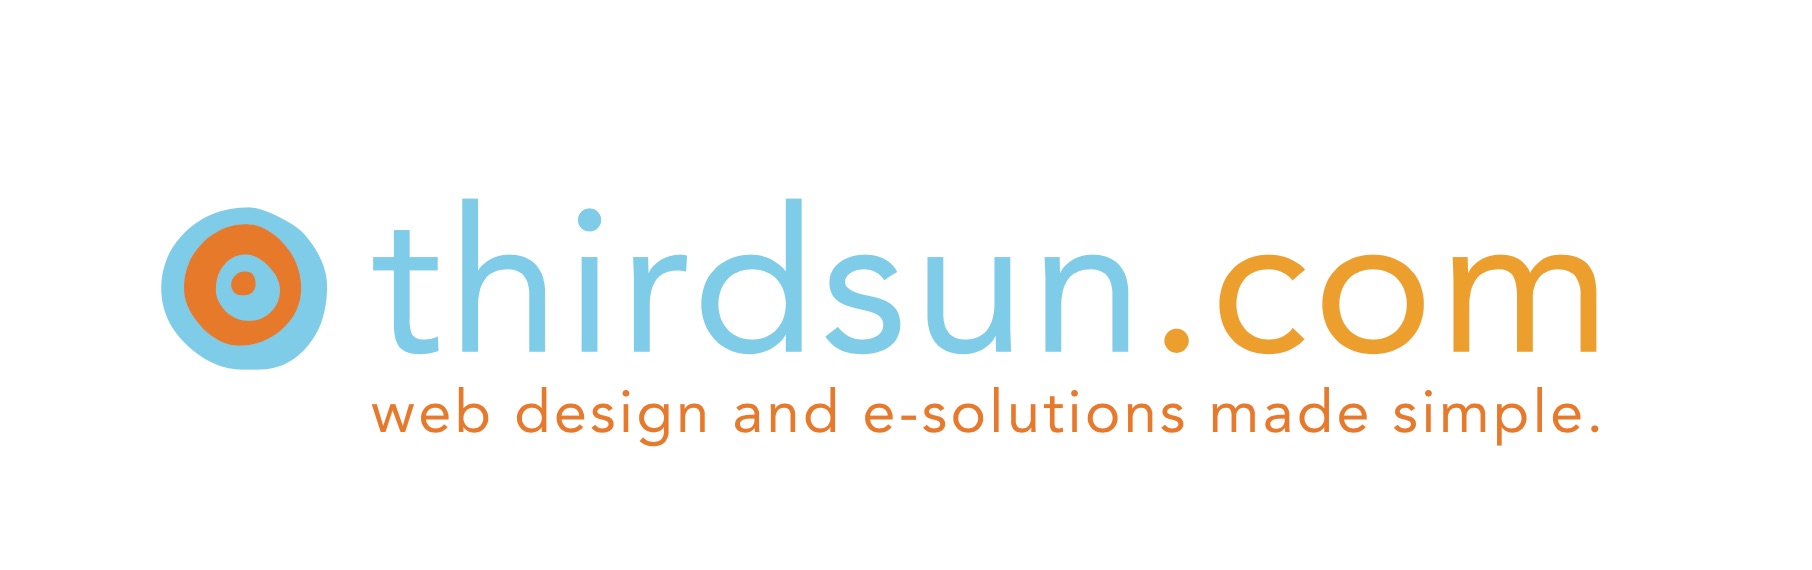 Third Sun original logo 2005